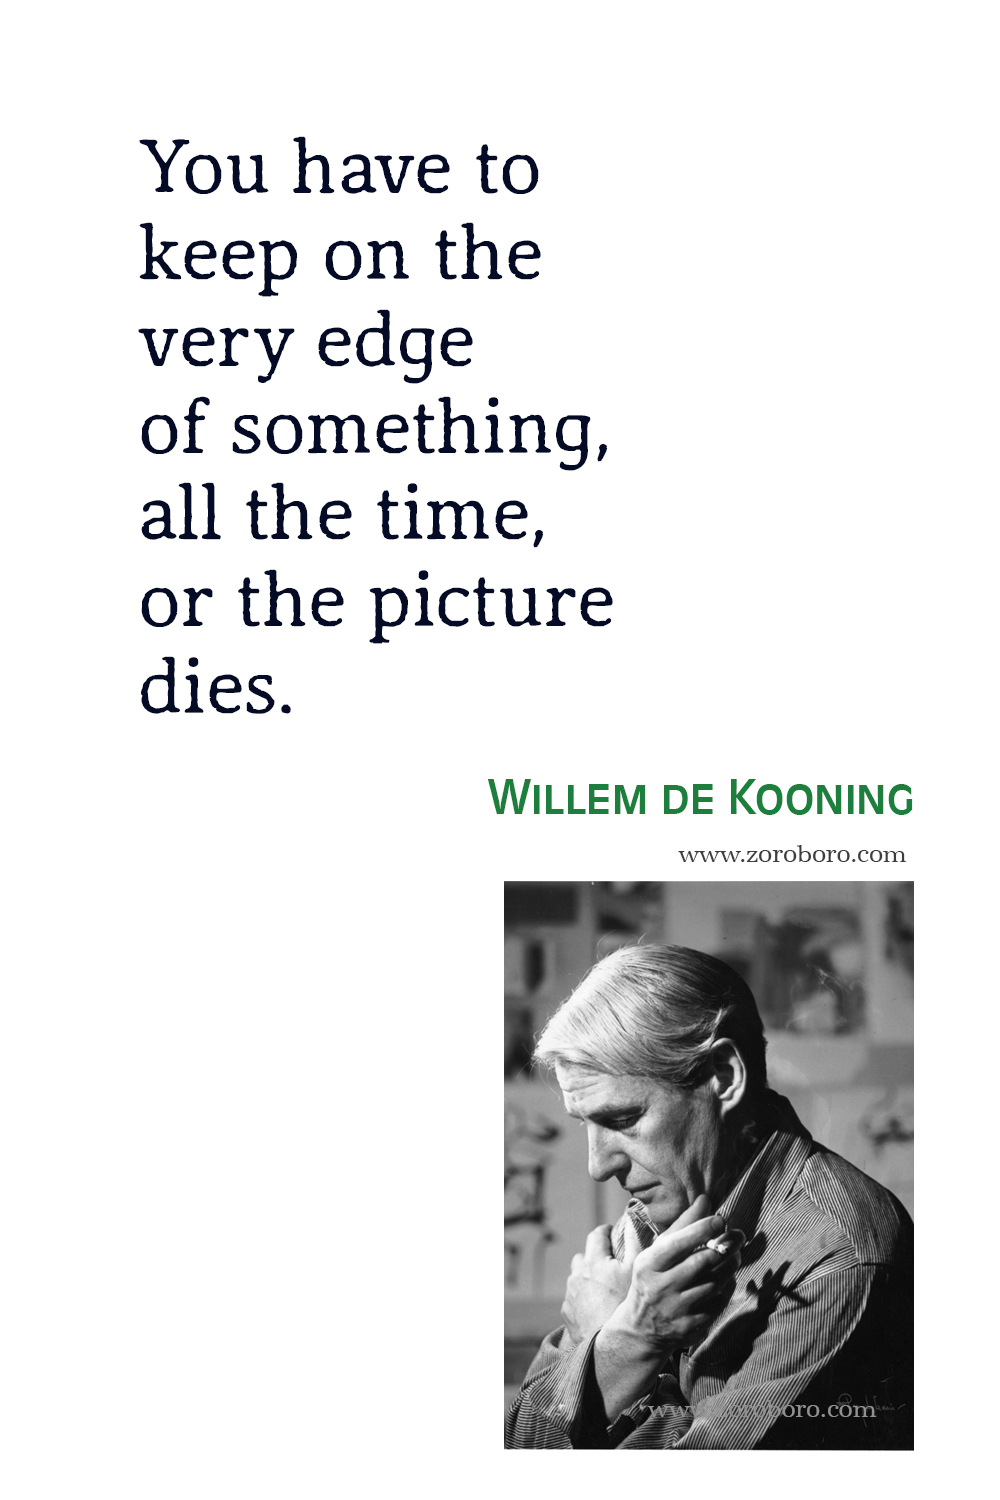 Willem de Kooning Quotes, Willem de Kooning Paintings, Willem de Kooning Abstract Expressionism, Willem de Kooning Quotes.